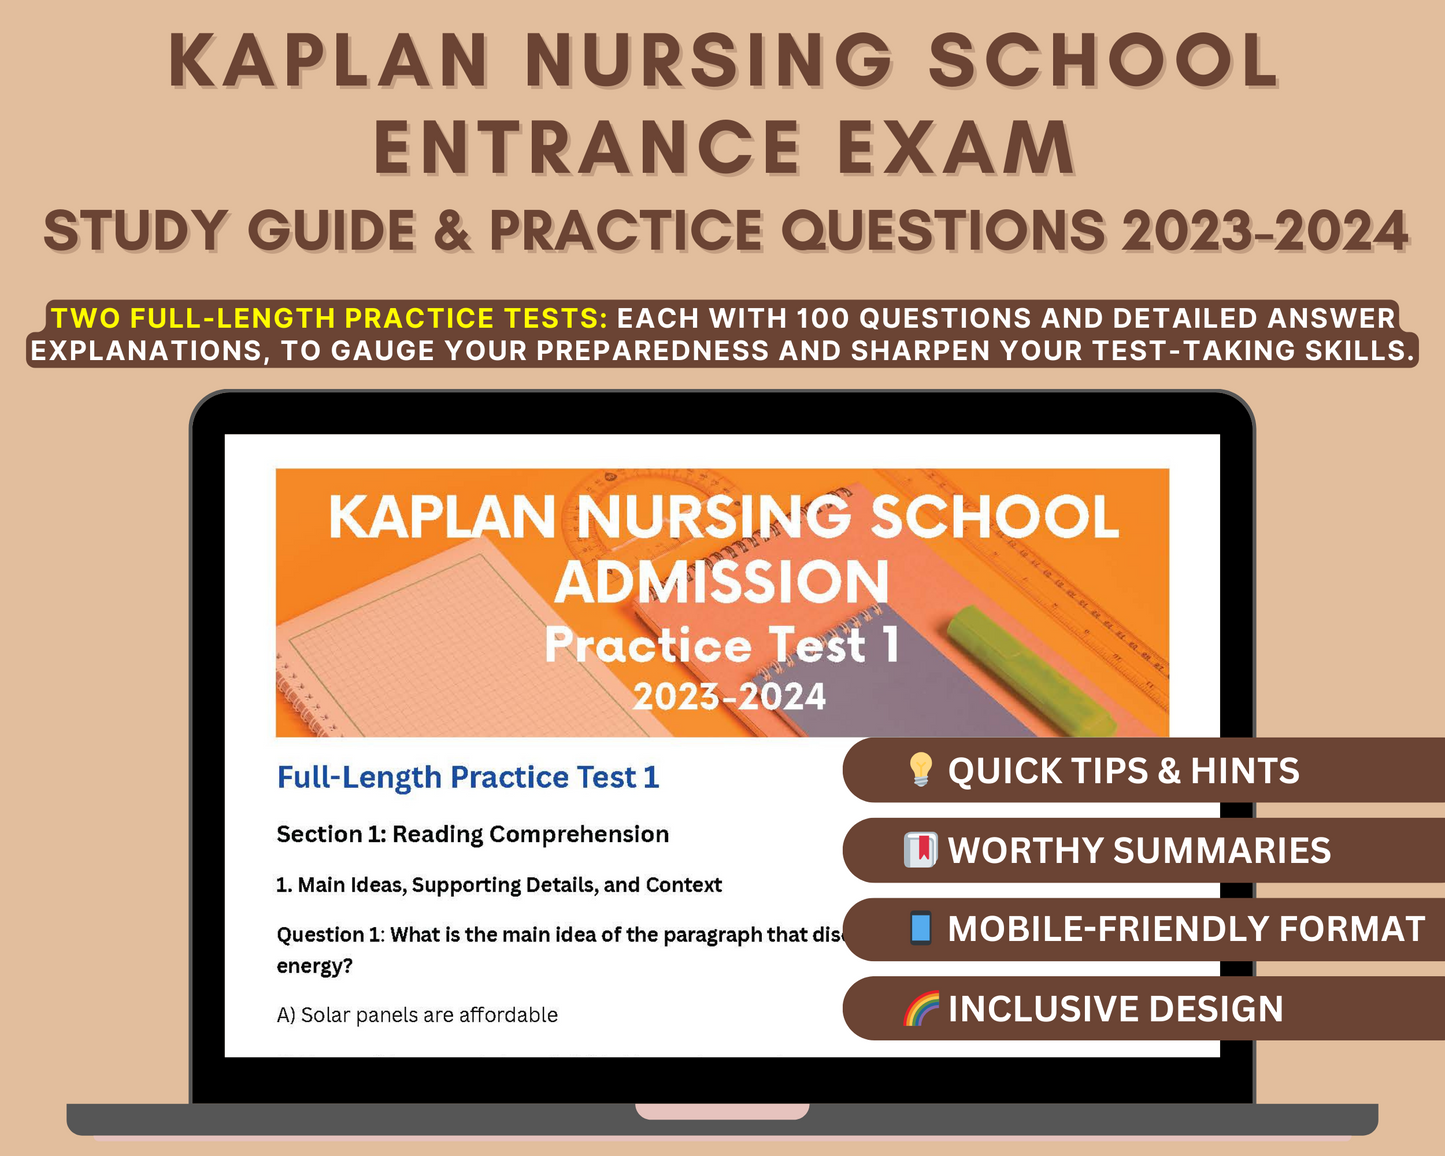 Kaplan Nursing School Exam Study Guide 2023-2024: In-Depth Content Review & Practice Tests for Nursing Career Prep